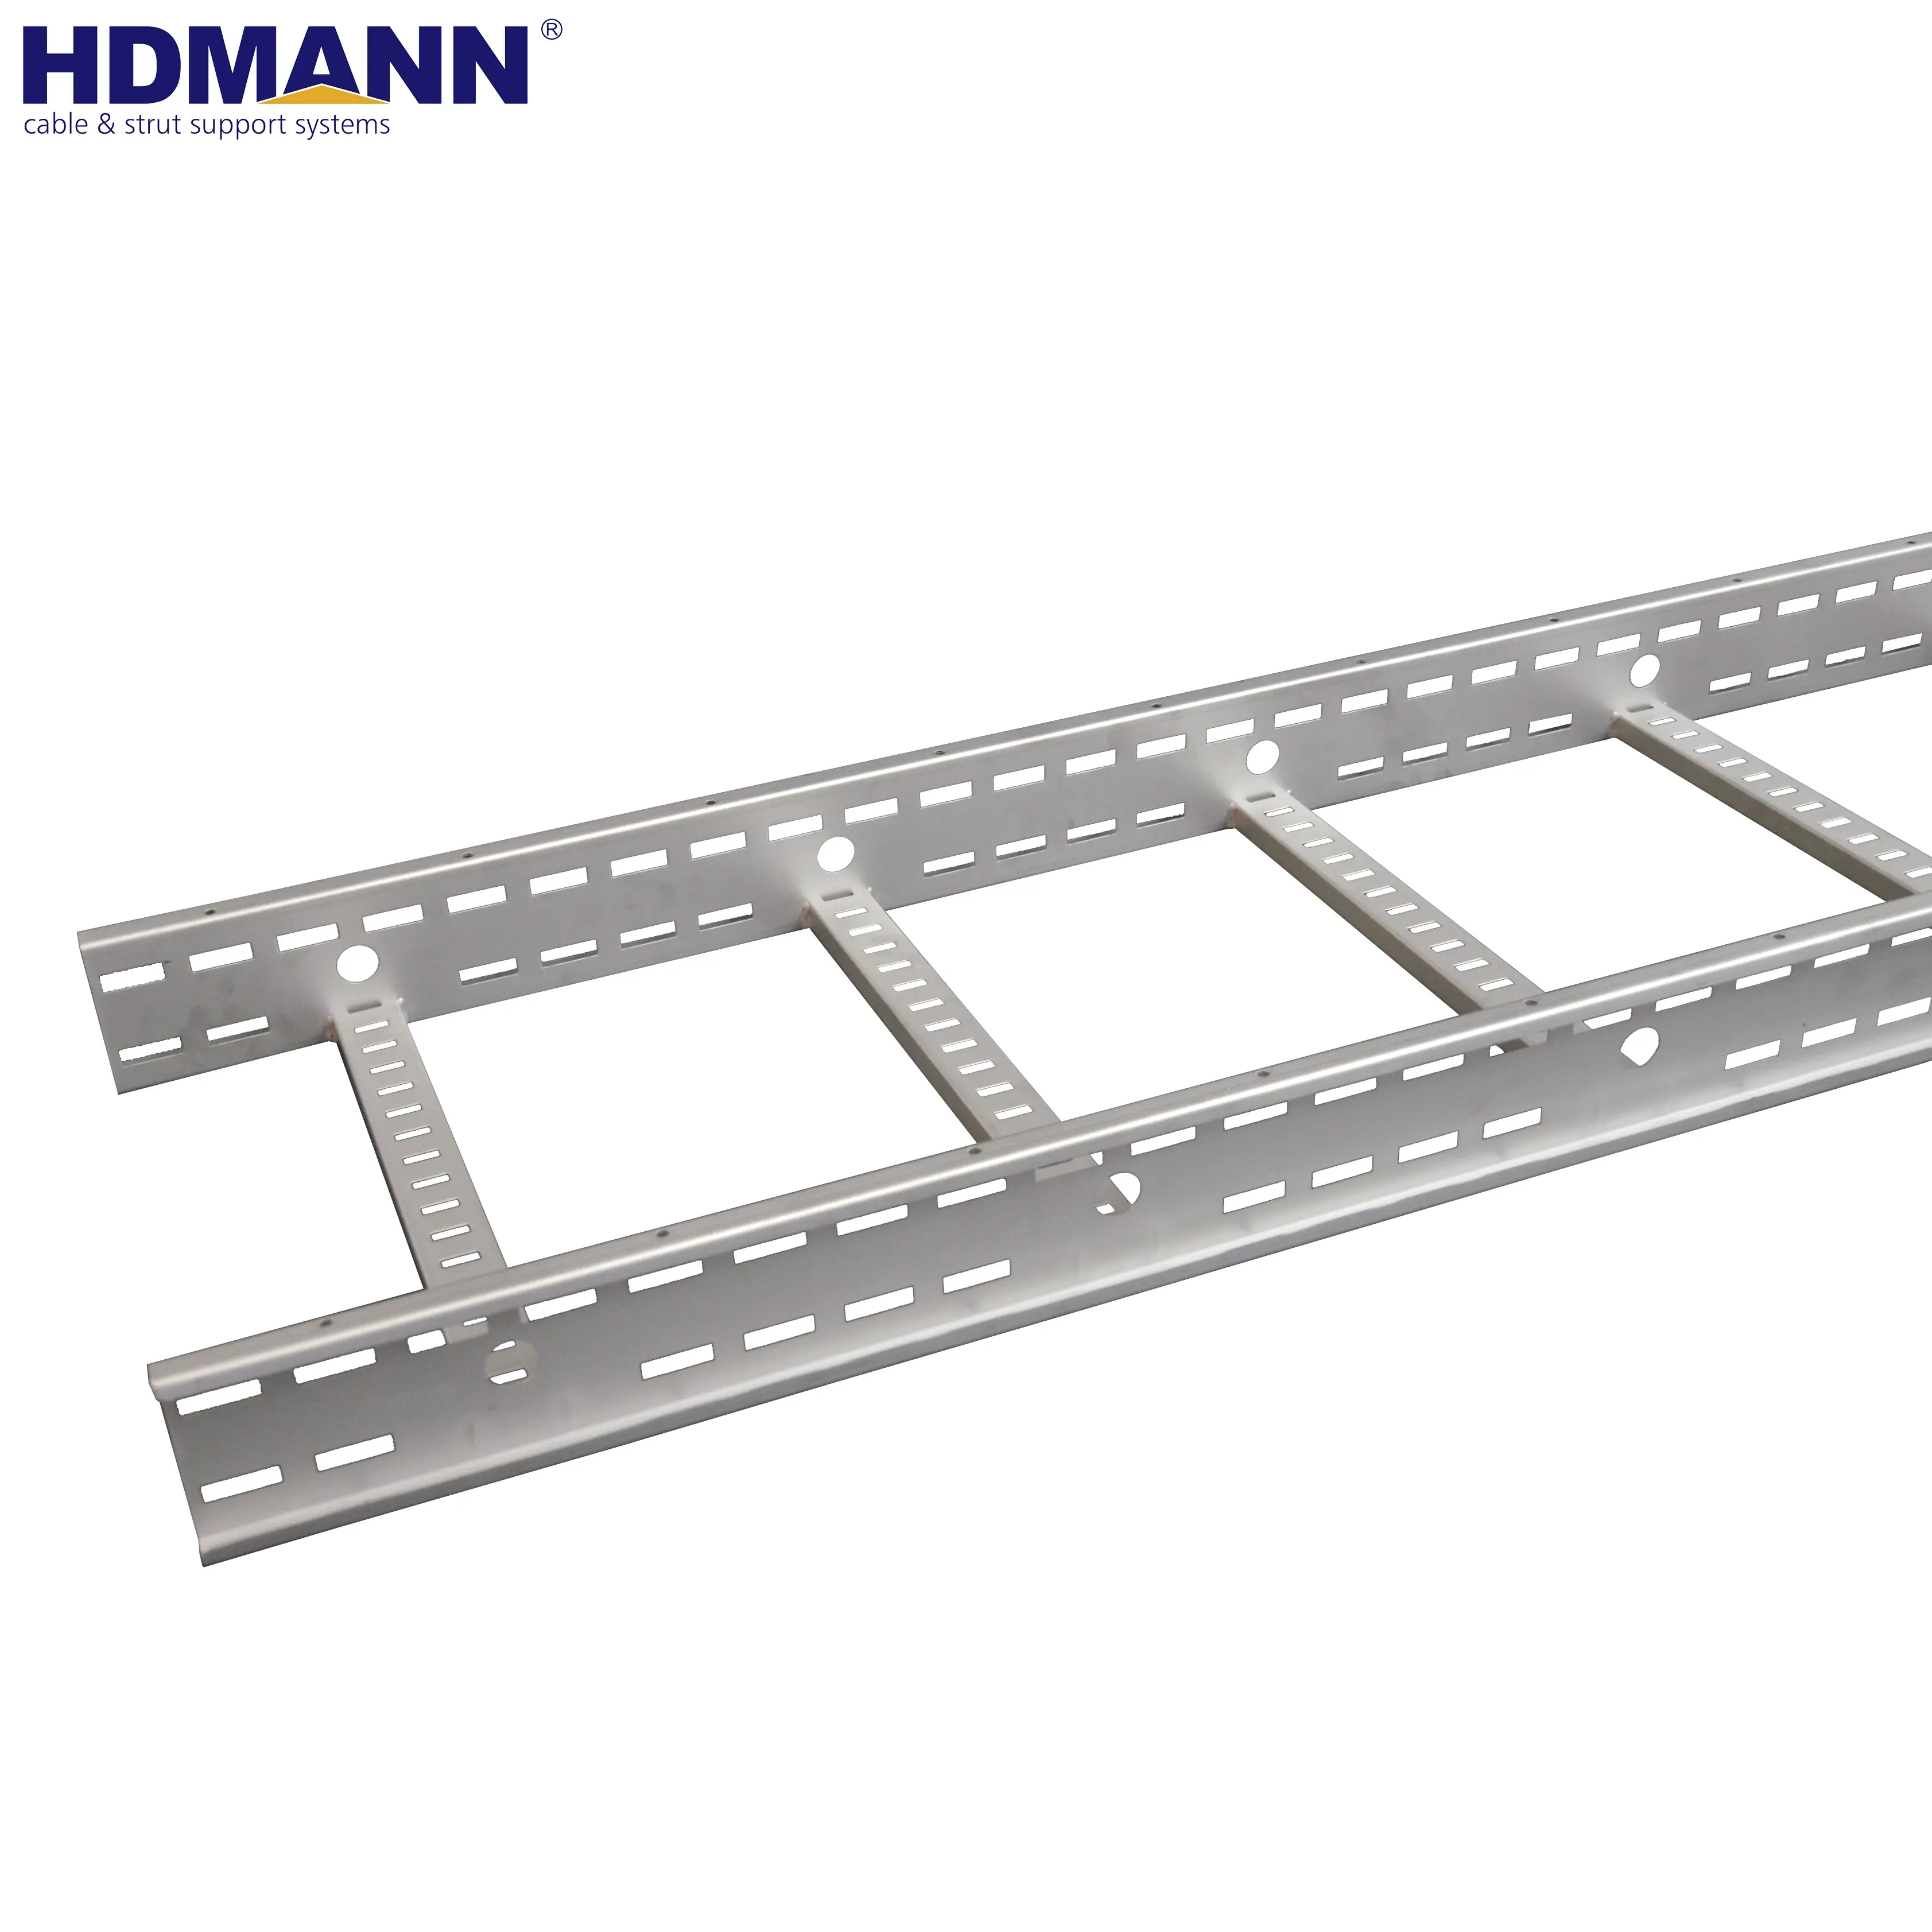 Construction Material Aluminum Nema 20b Cable Ladder Price